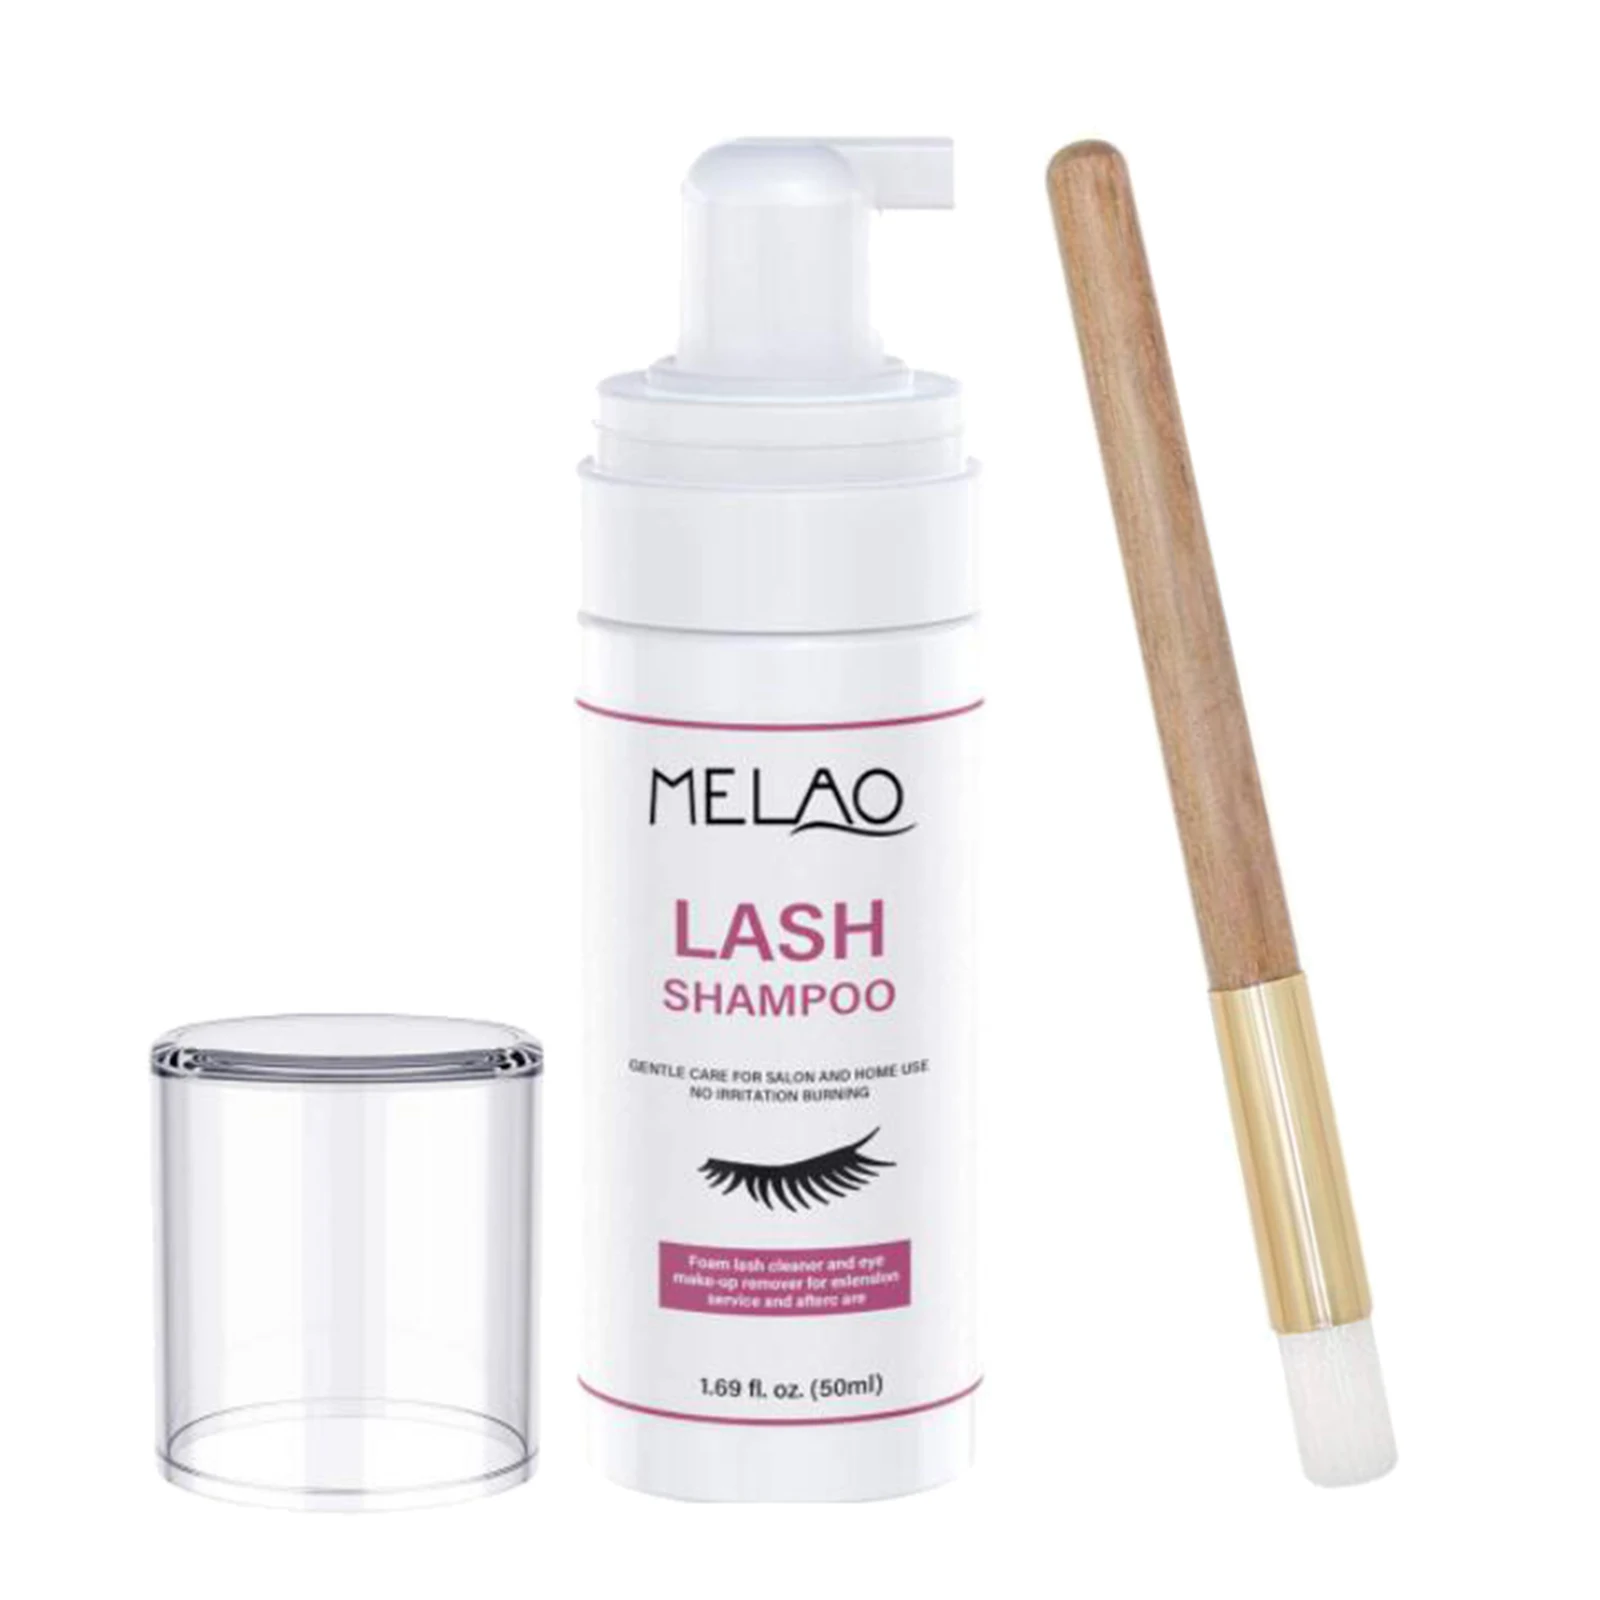 Eyelash Extensions Lash Shampoo 1.69 Fl.oz / 50ml Cleaning Foam Cleaner